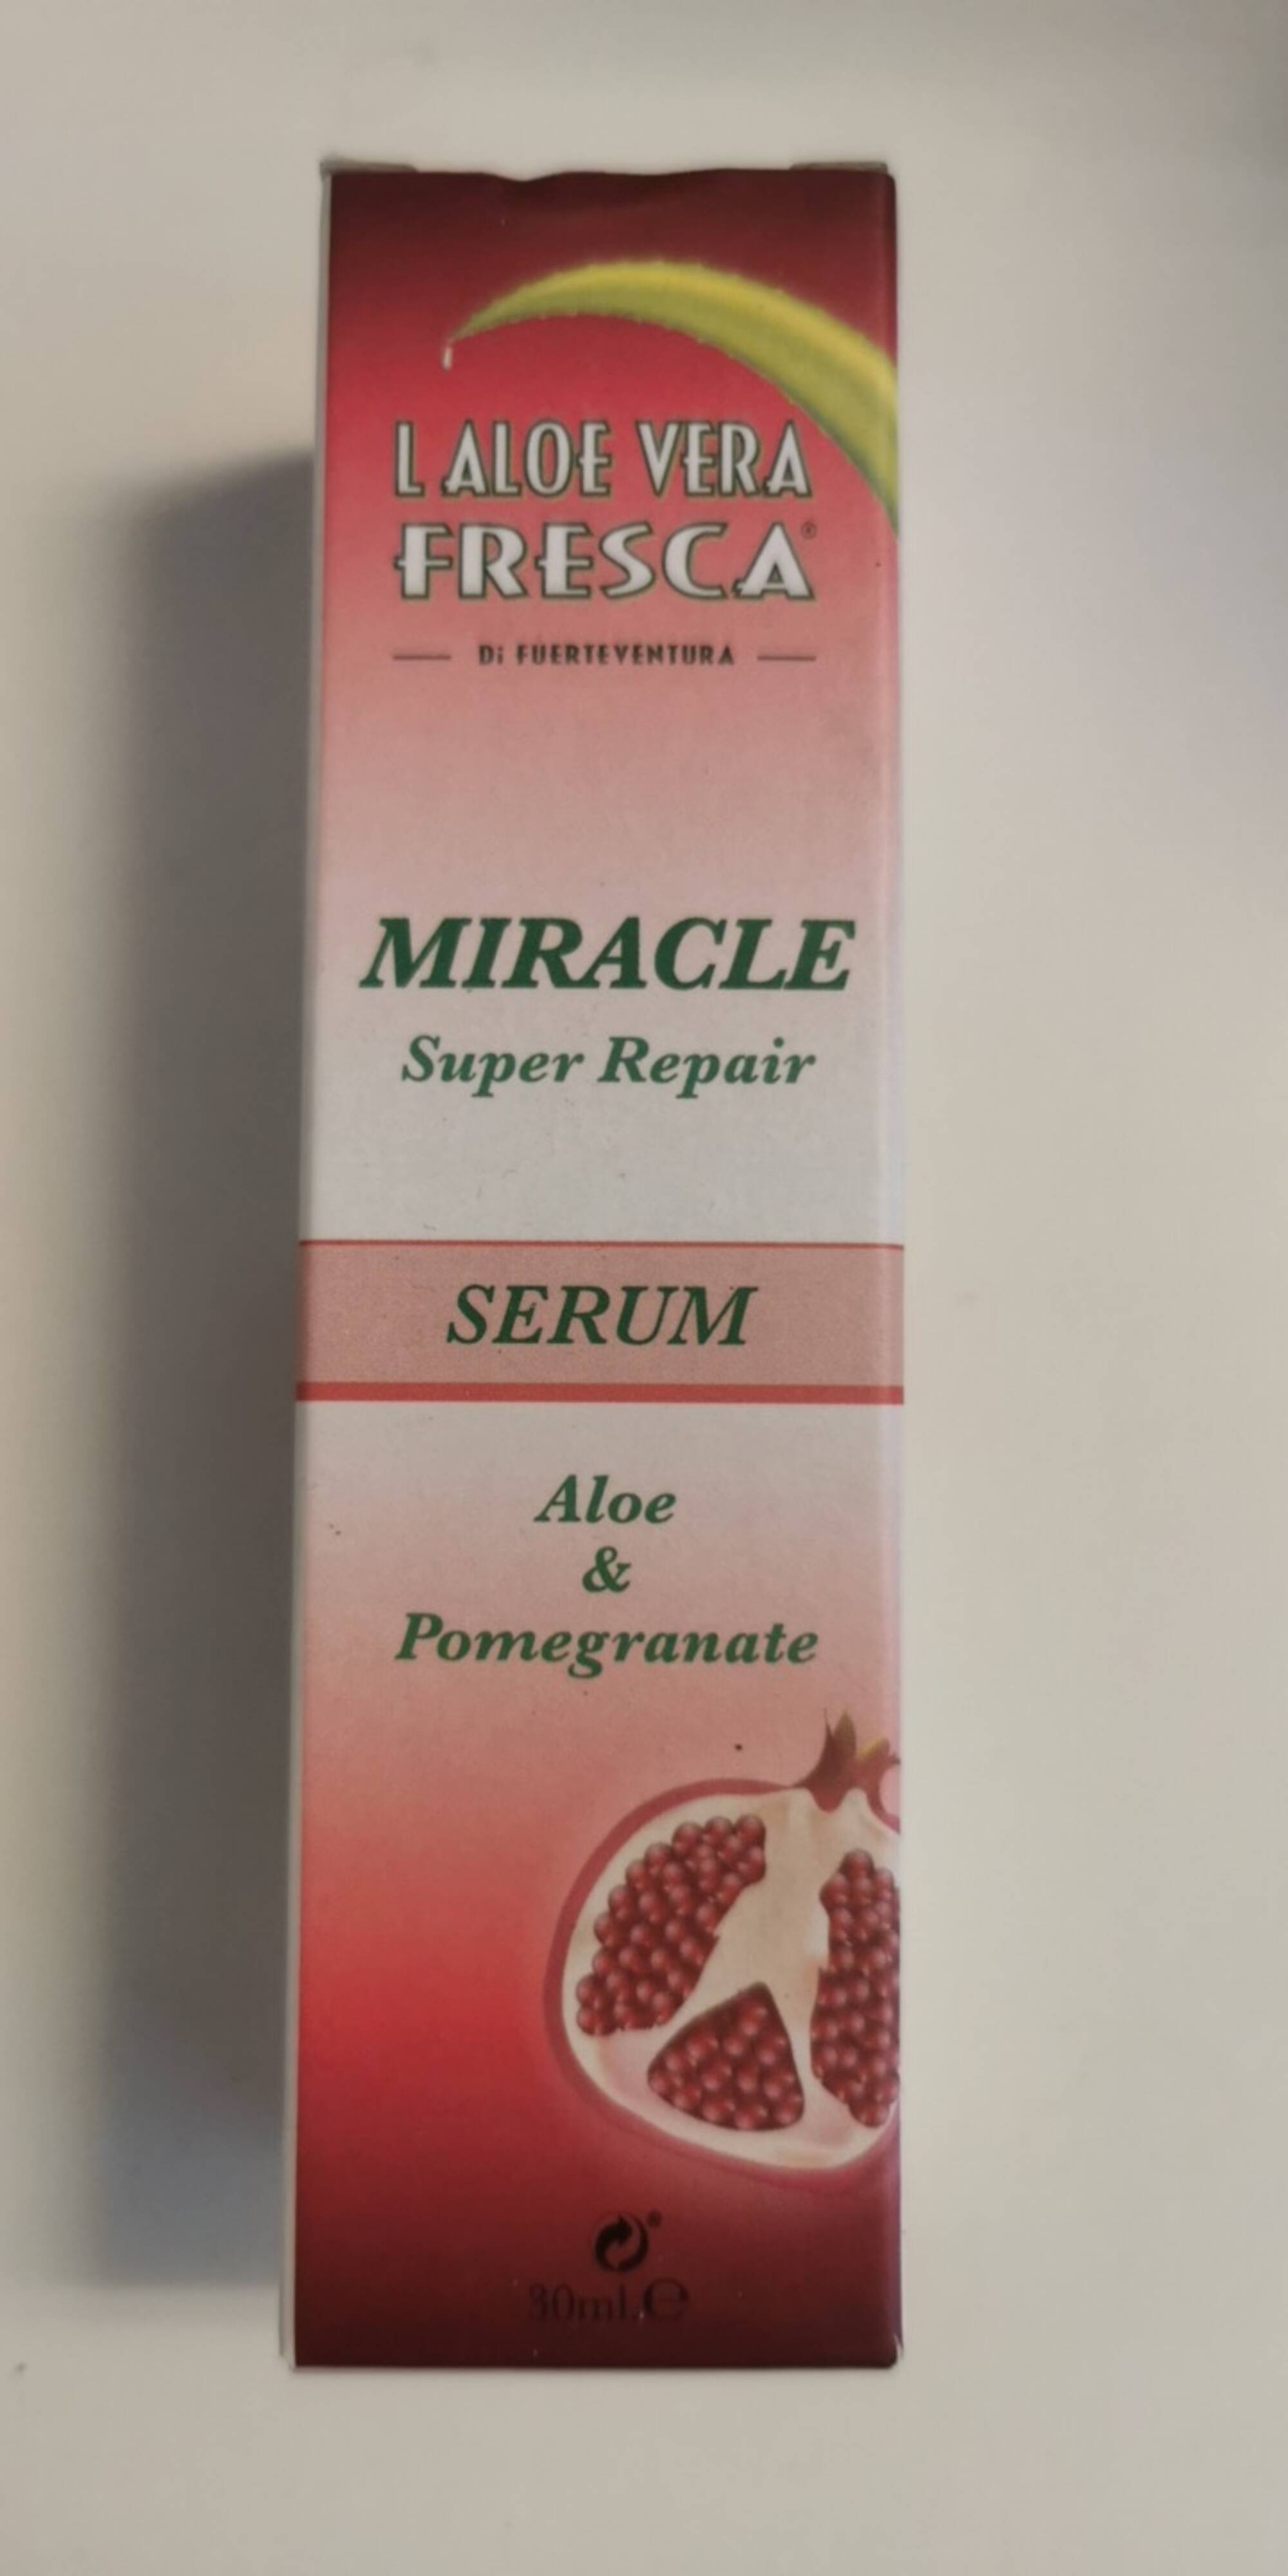 L'ALOE VERA FRESCA - Miracle super repair - Serum